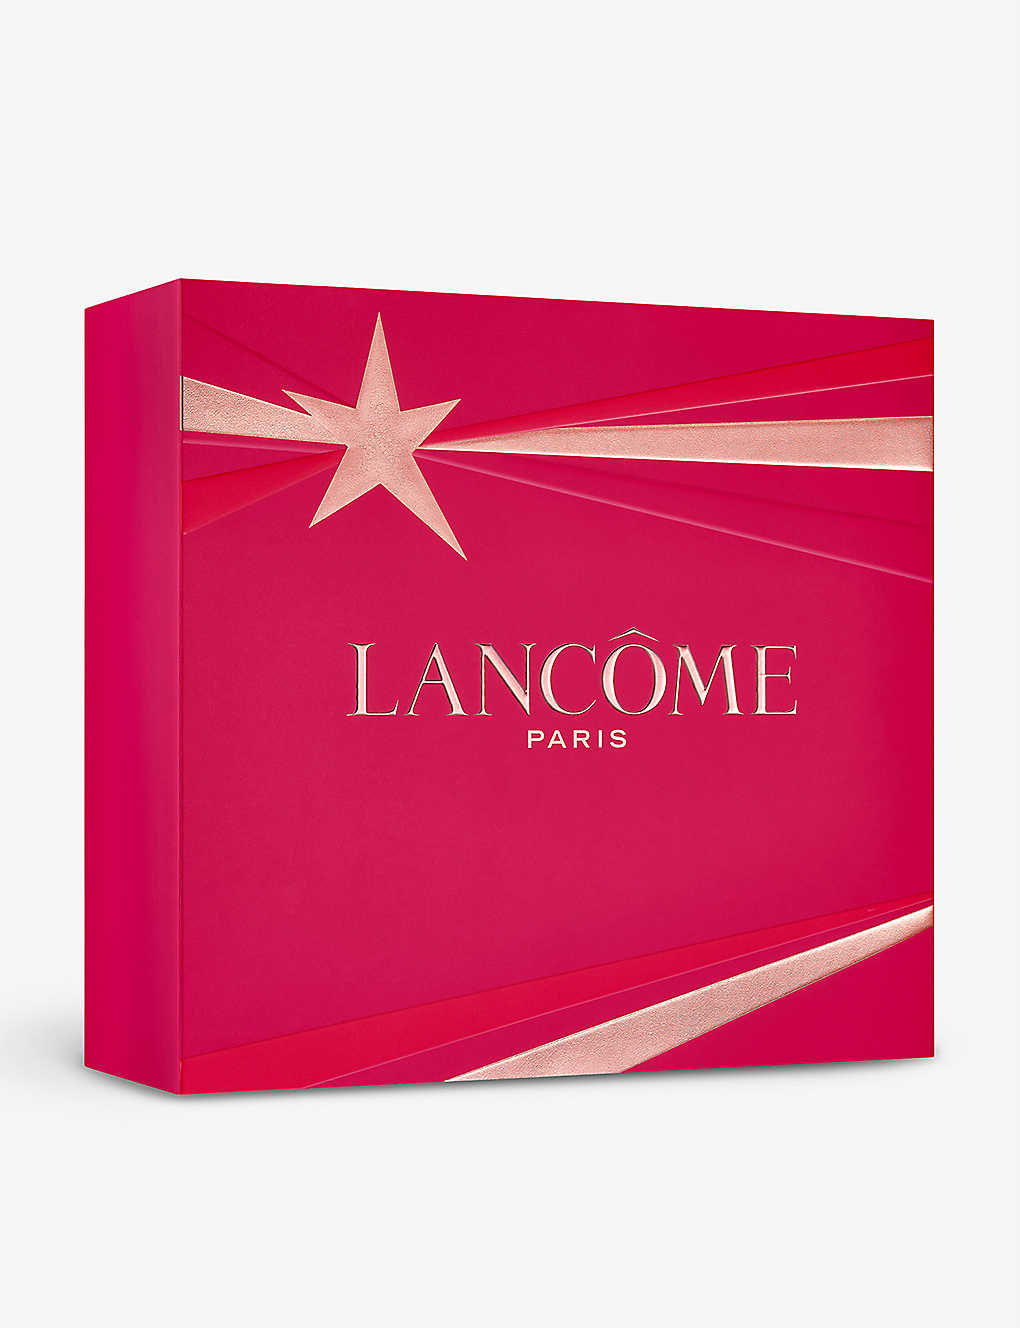 Lancôme Beauty advent calendar 2021